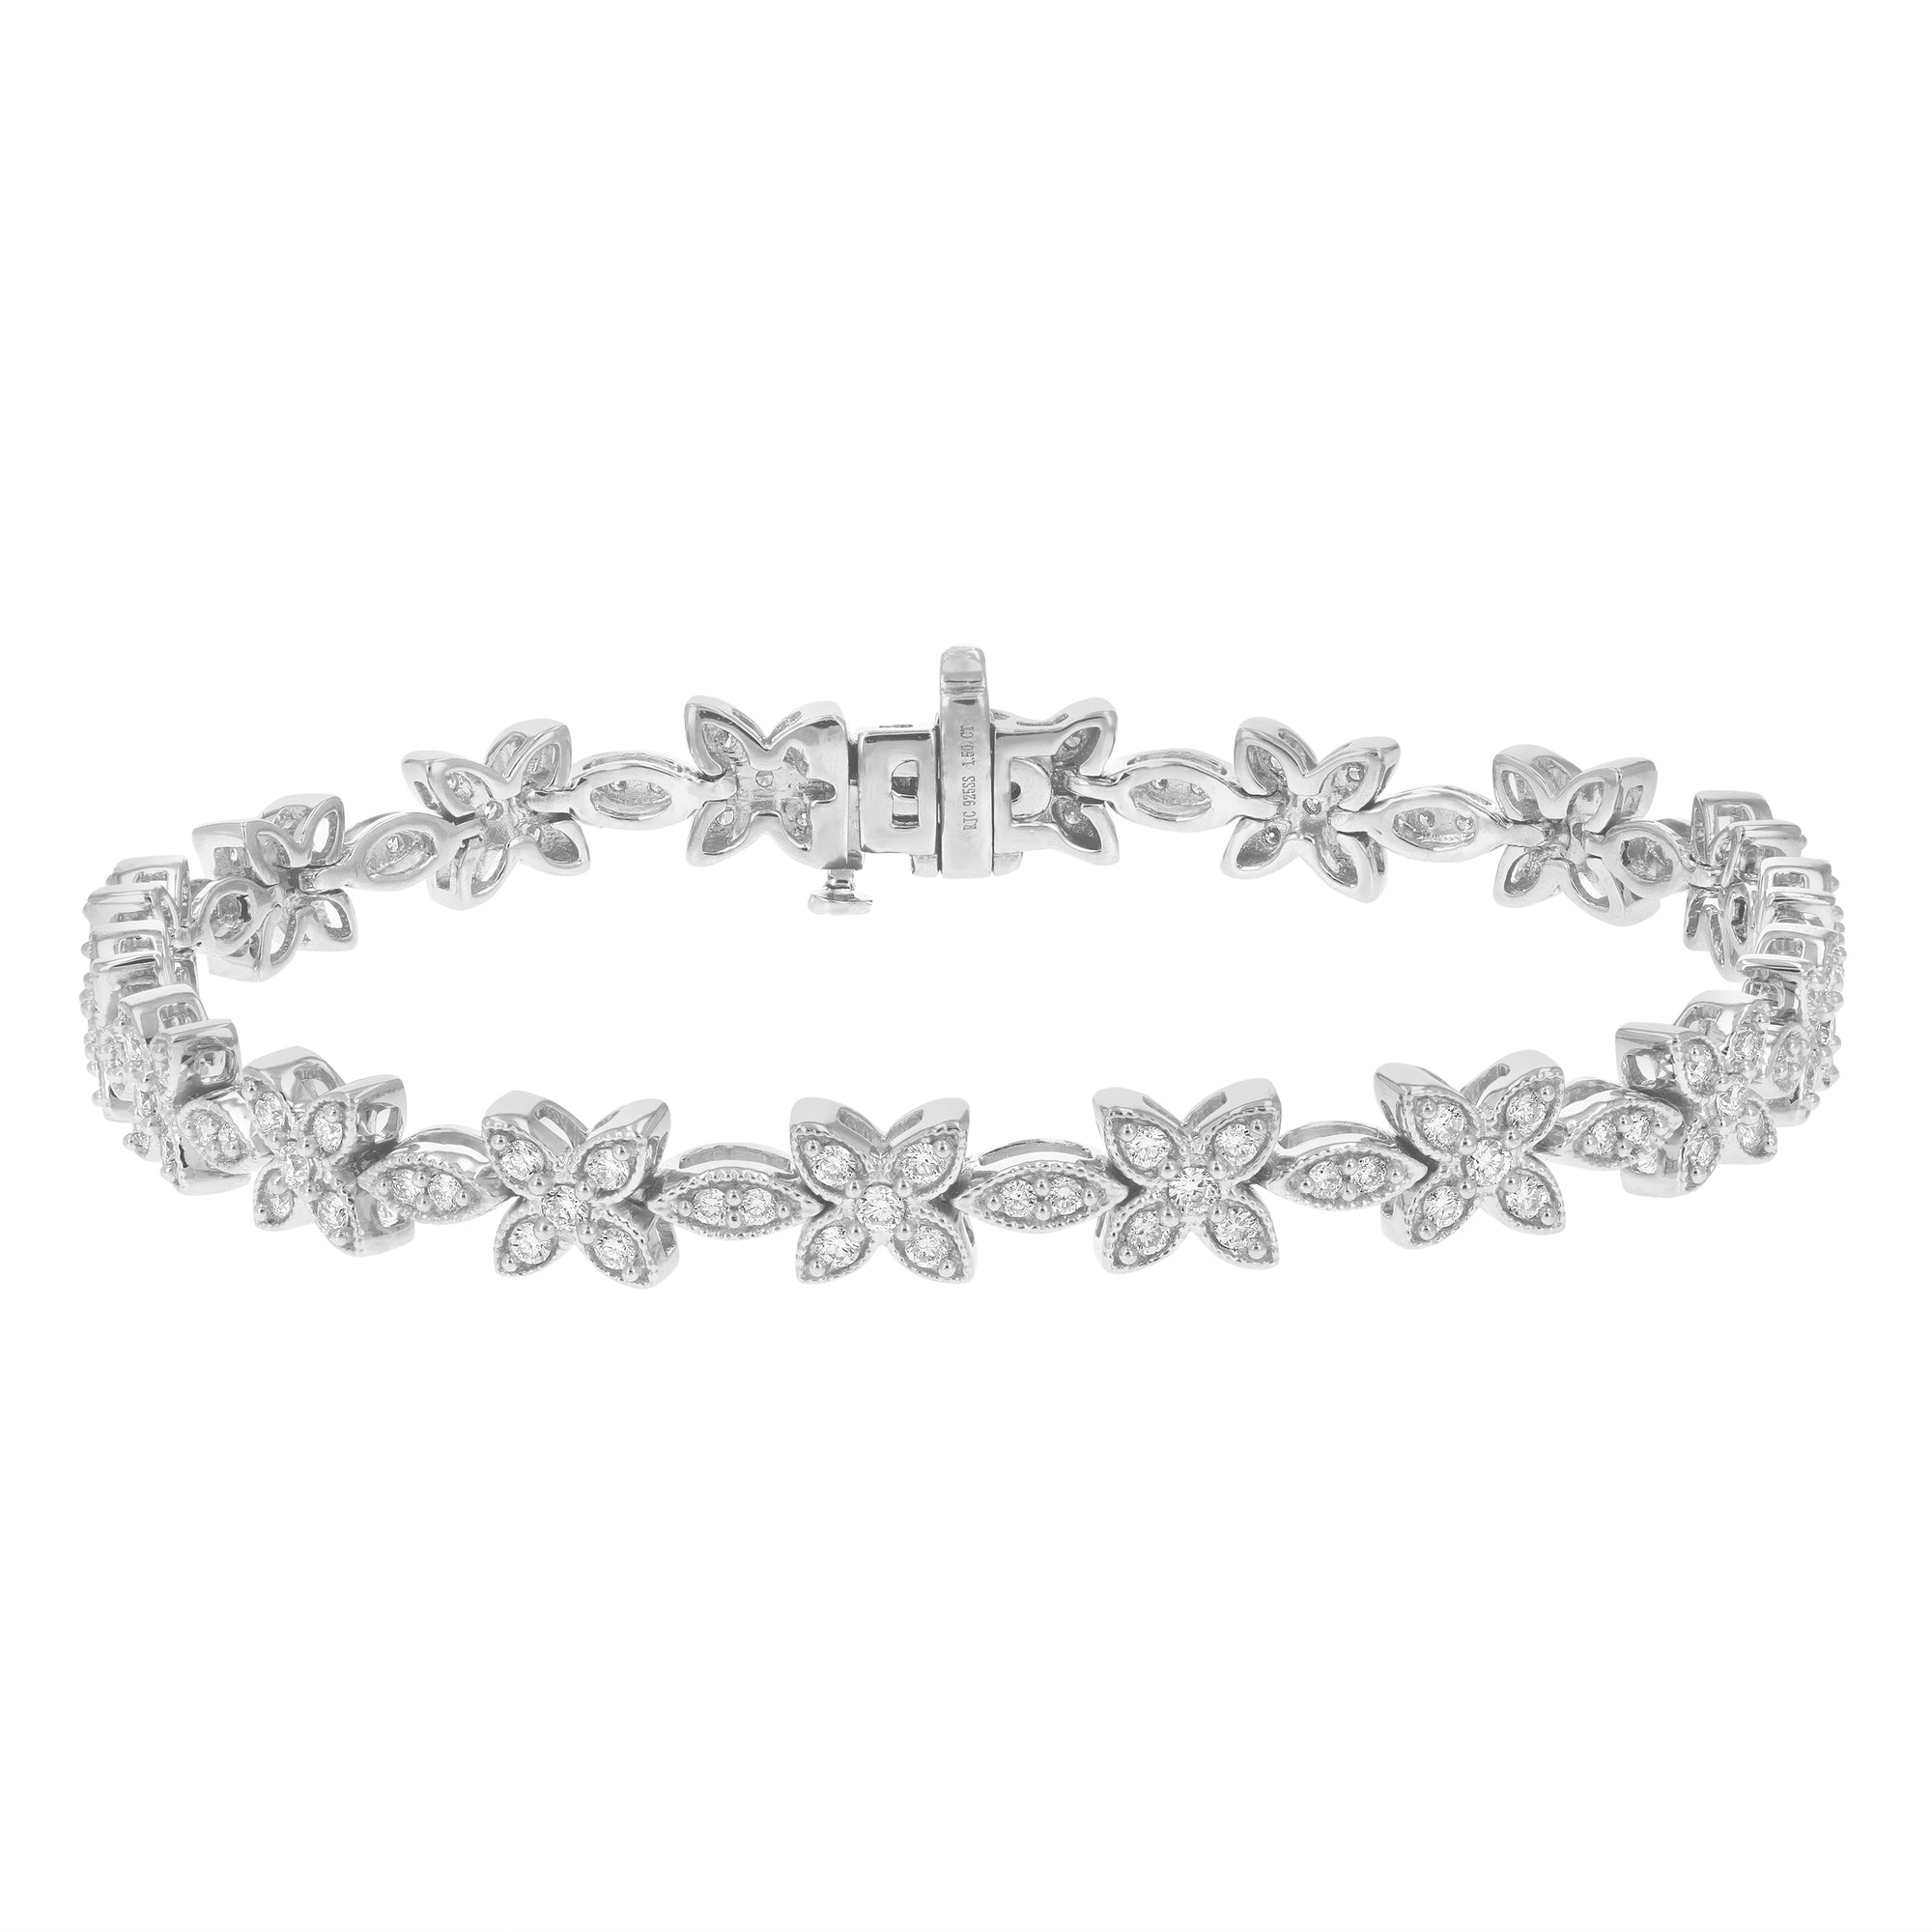 1.5 cttw Diamond Bracelet for Women, Round Lab Grown Diamond Tennis Bracelet in .925 Sterling Silver, Prong Setting, 7 Inch